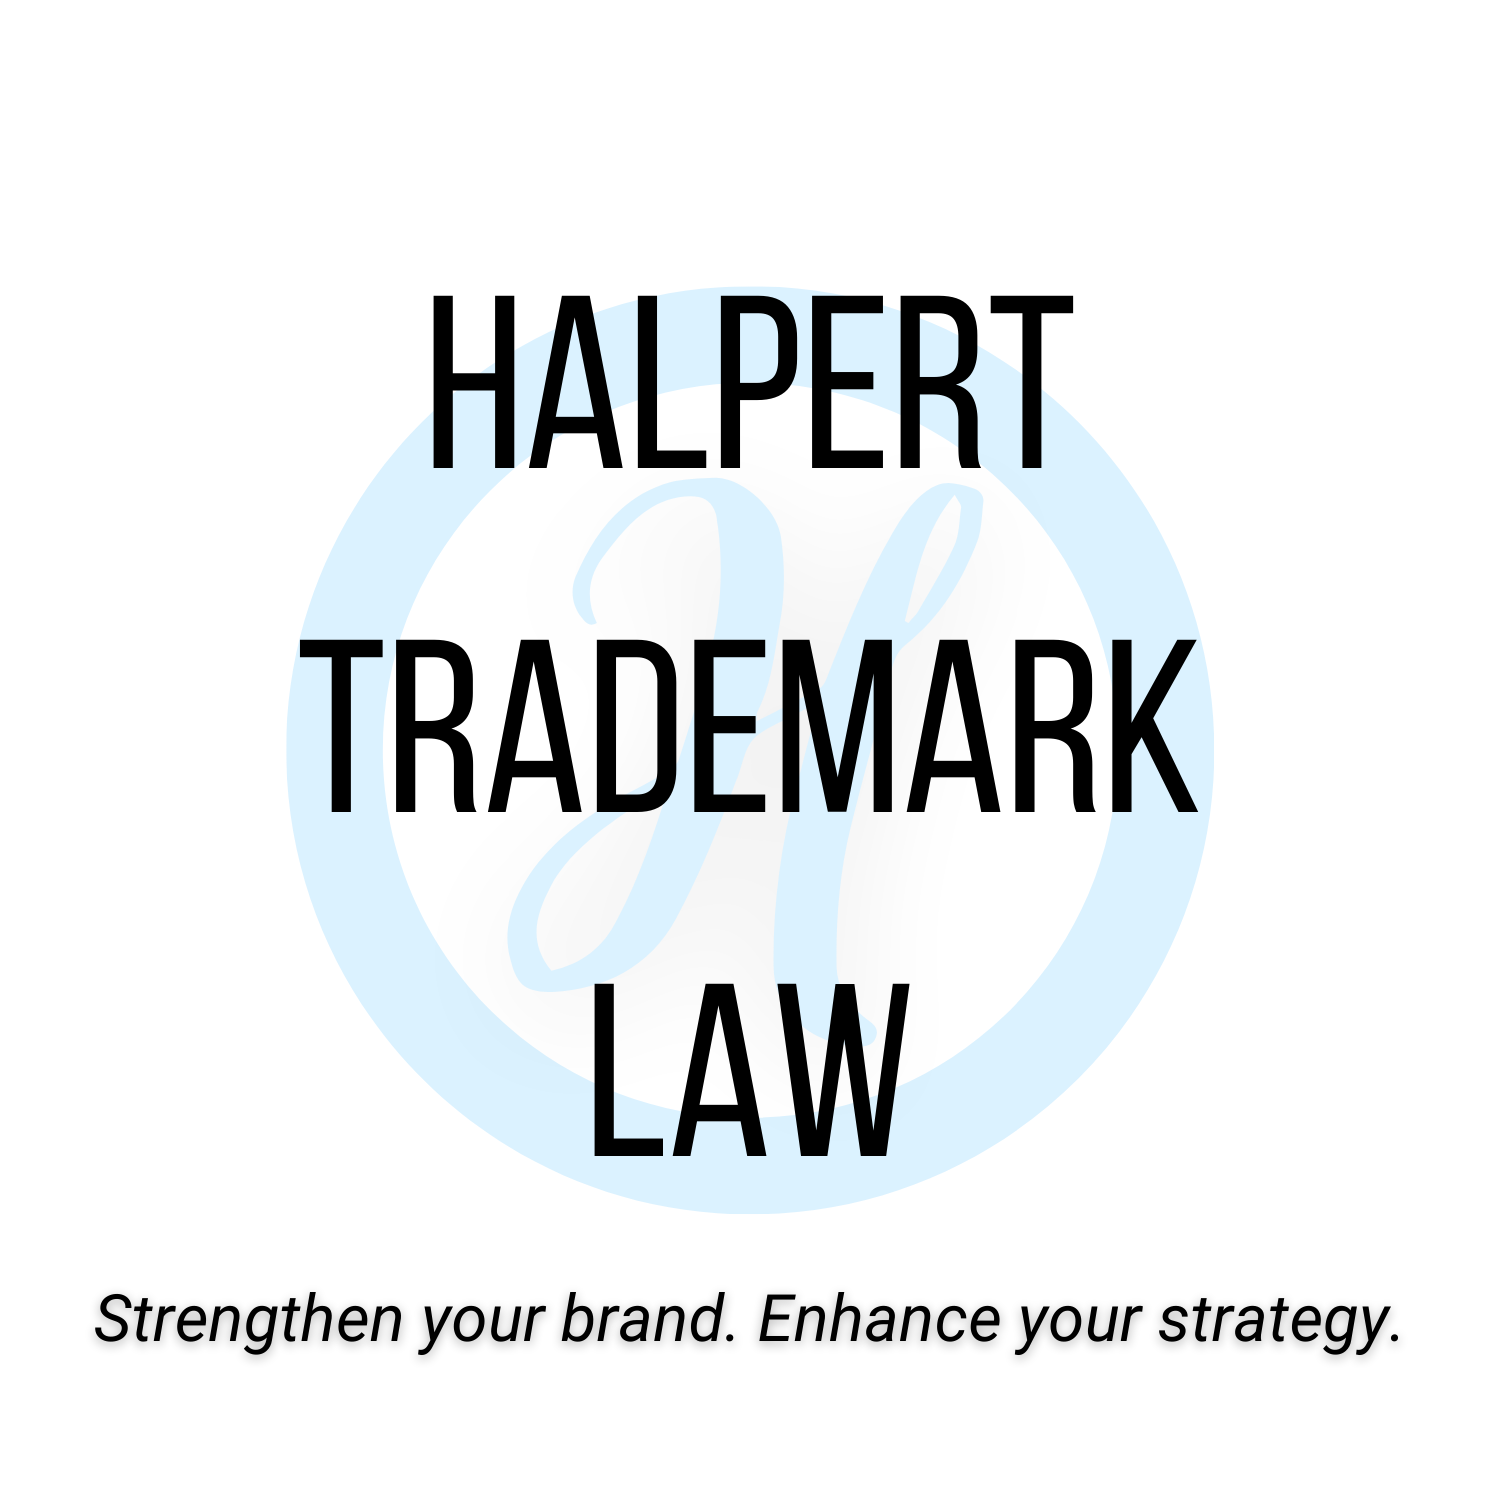 Halpert Trademark Law (1)